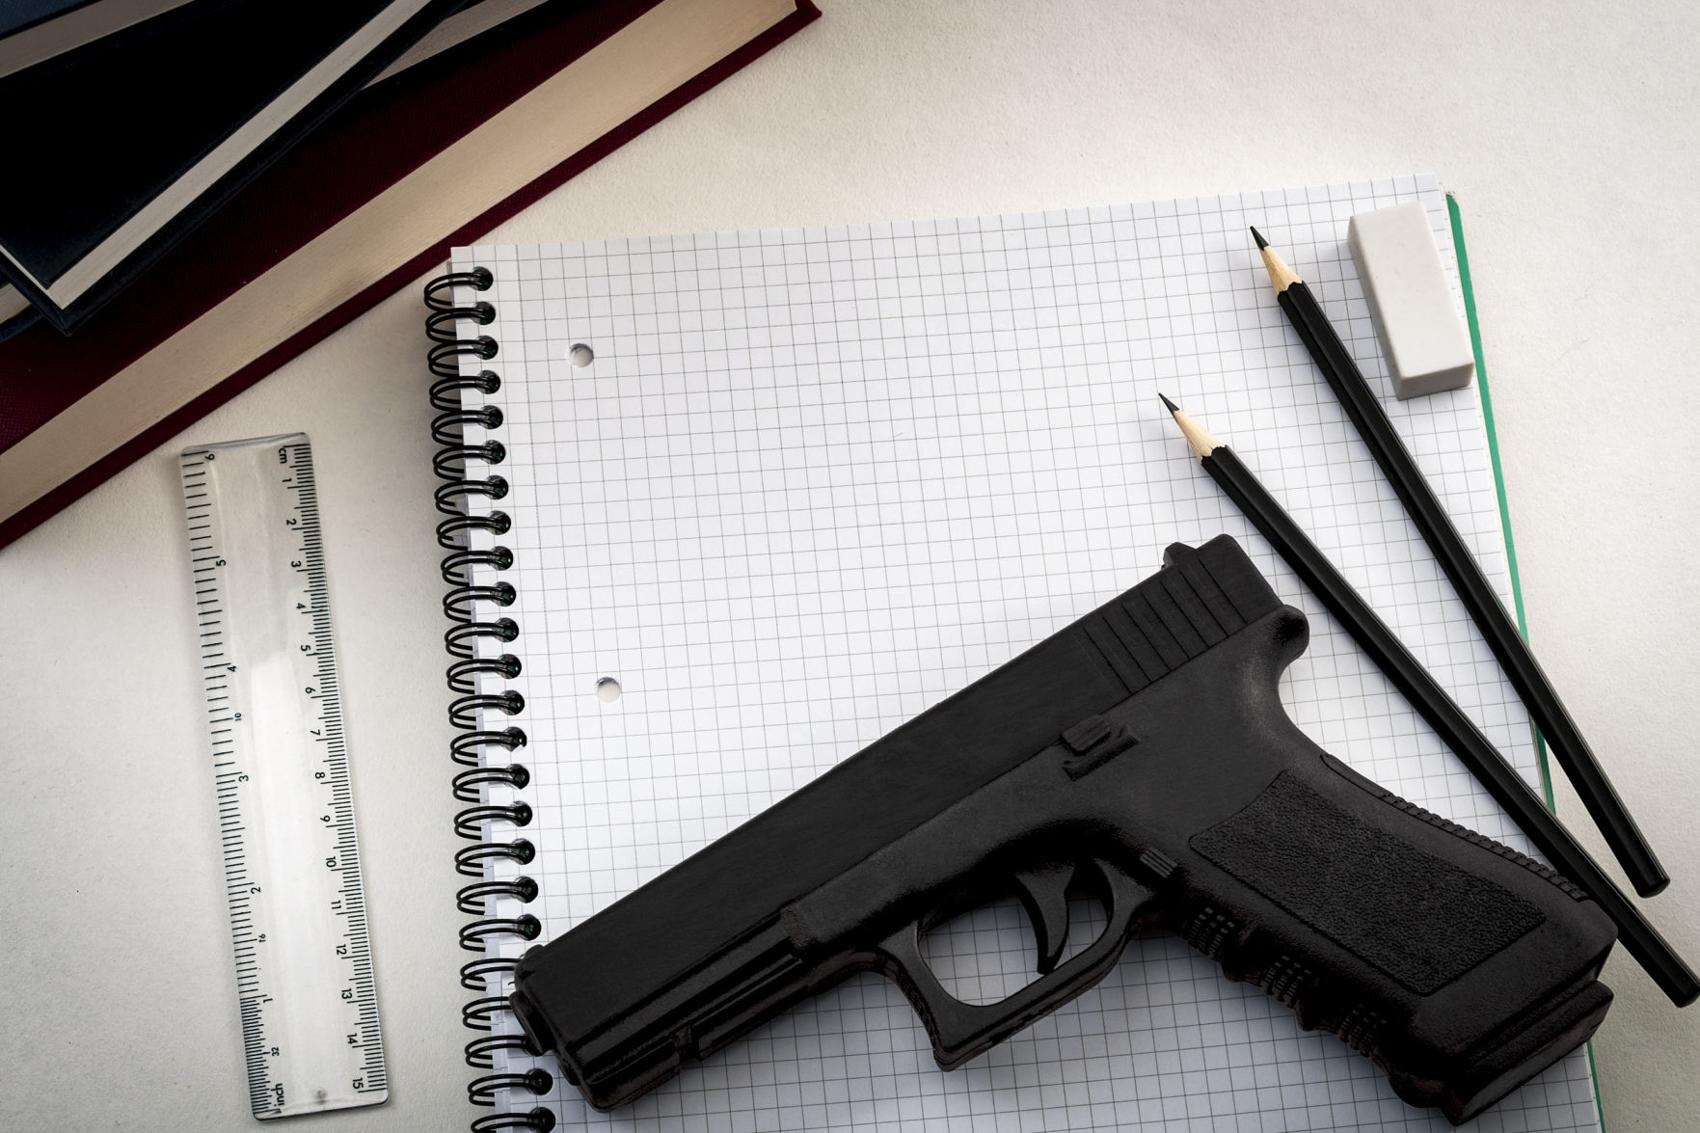 Gun laying atop notebook